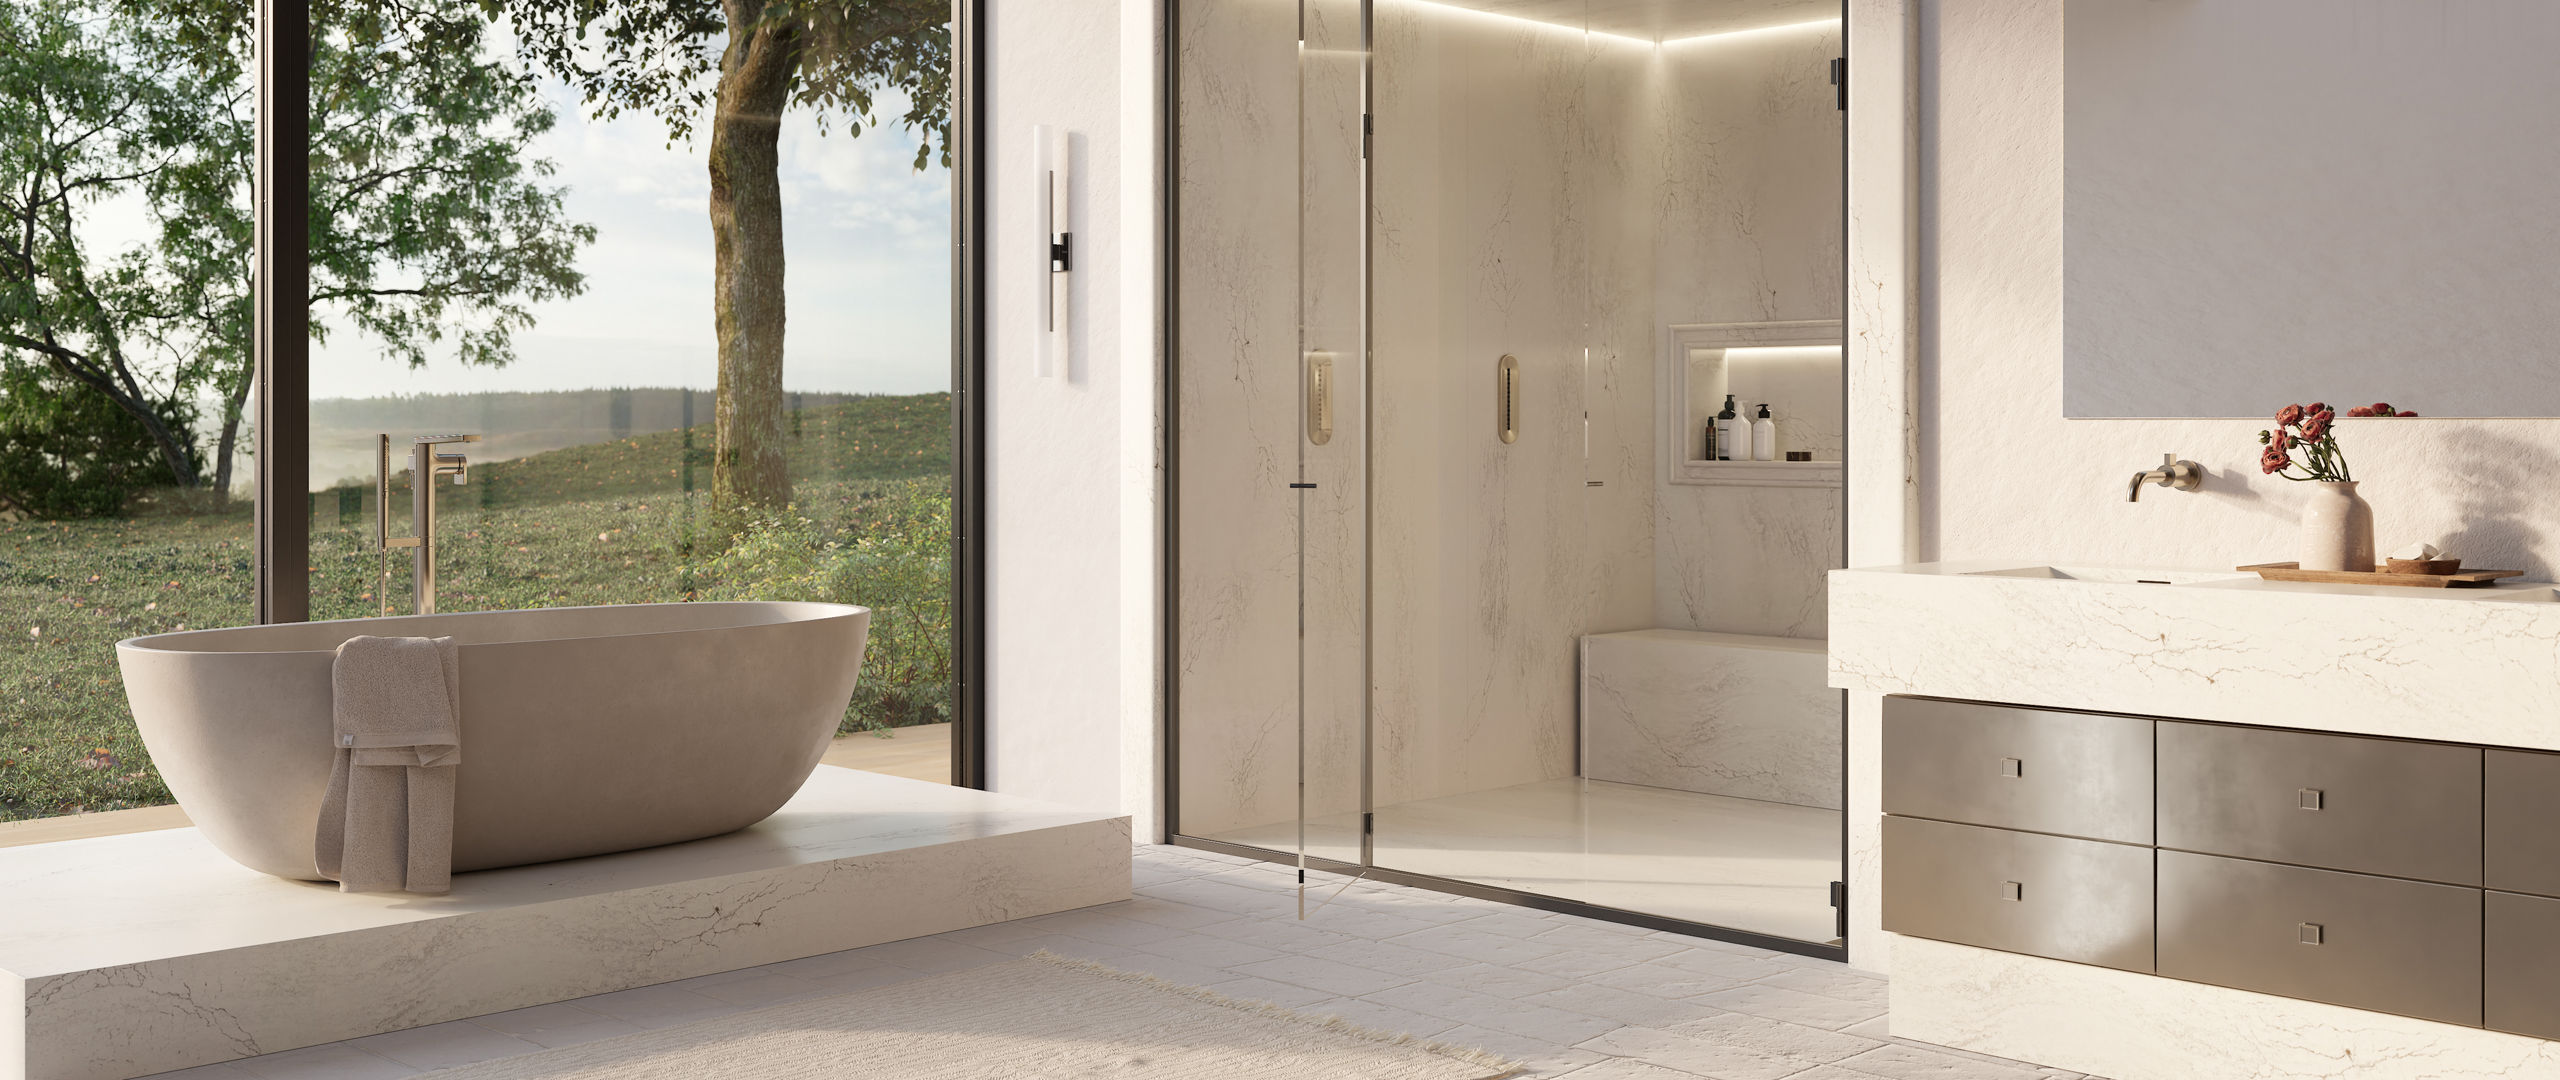 MacBeth bathroom with tub platform, shower surround, and vanity